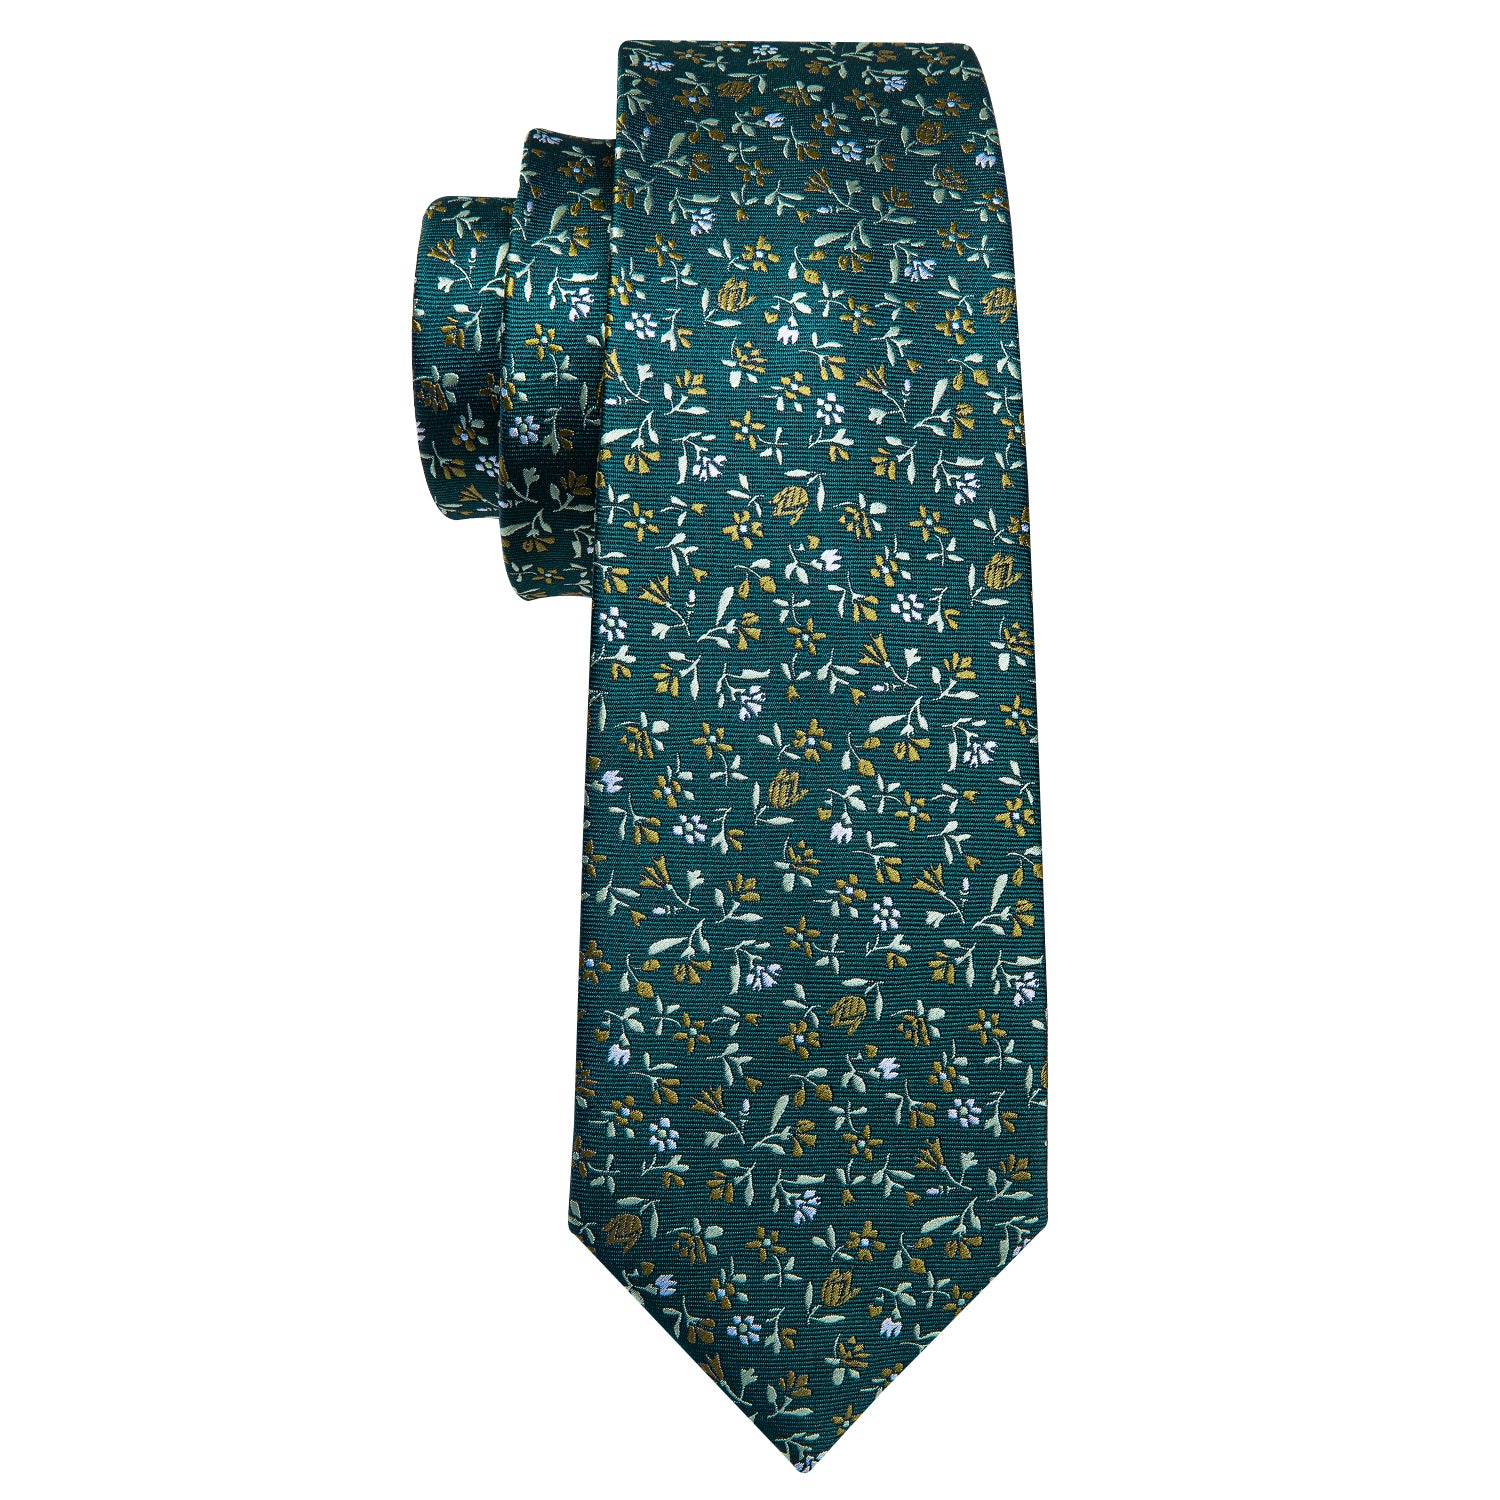 Barry Wang Men's Tie Olive Green Small Floral Tie Hanky Cufflinks Set